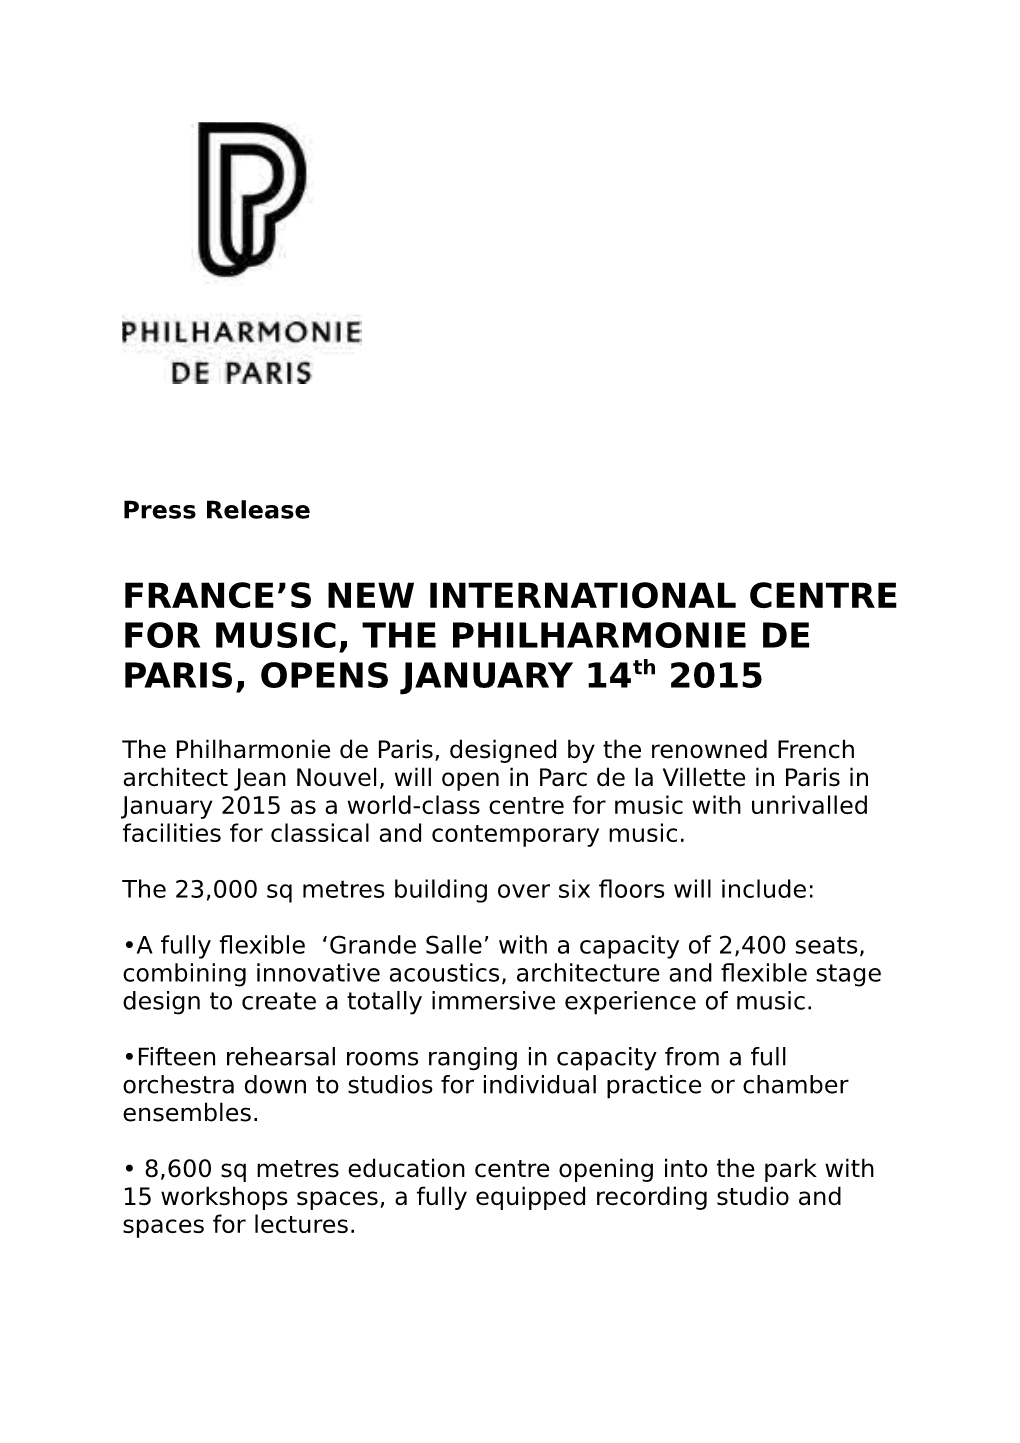 FRANCE's NEW INTERNATIONAL CENTRE for MUSIC, the PHILHARMONIE DE PARIS, OPENS JANUARY 14Th 2015